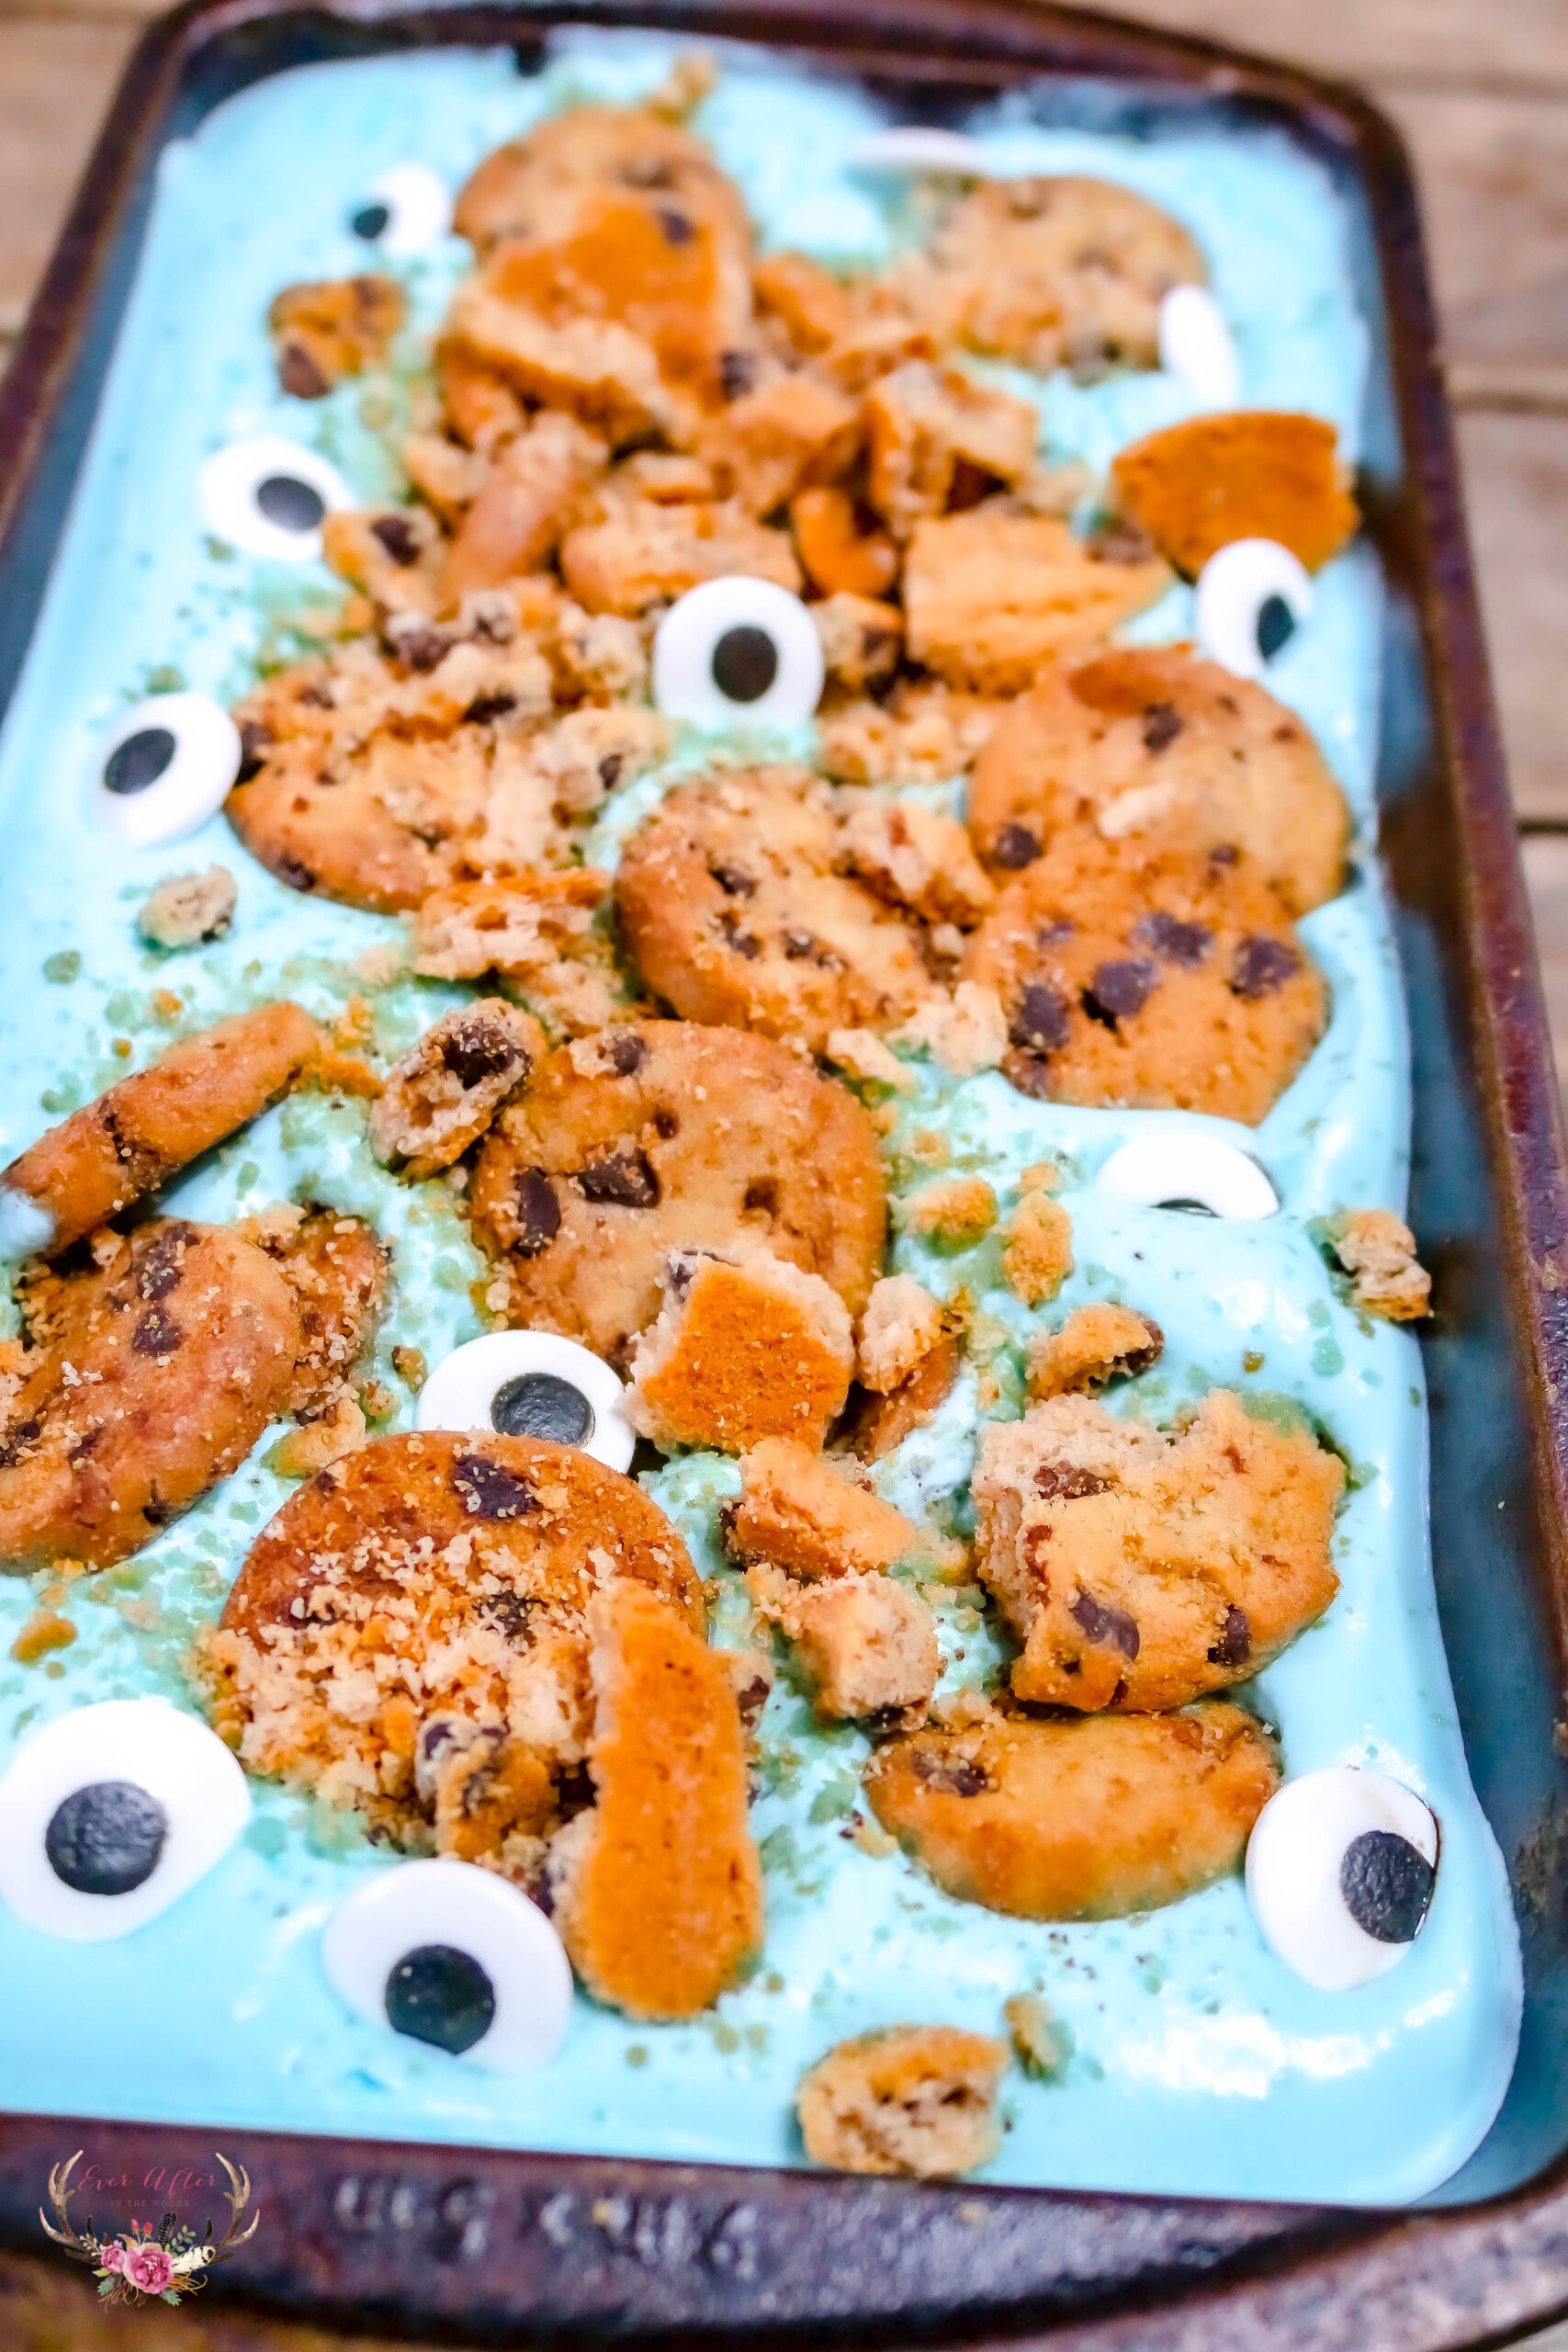 cookie monster ice cream